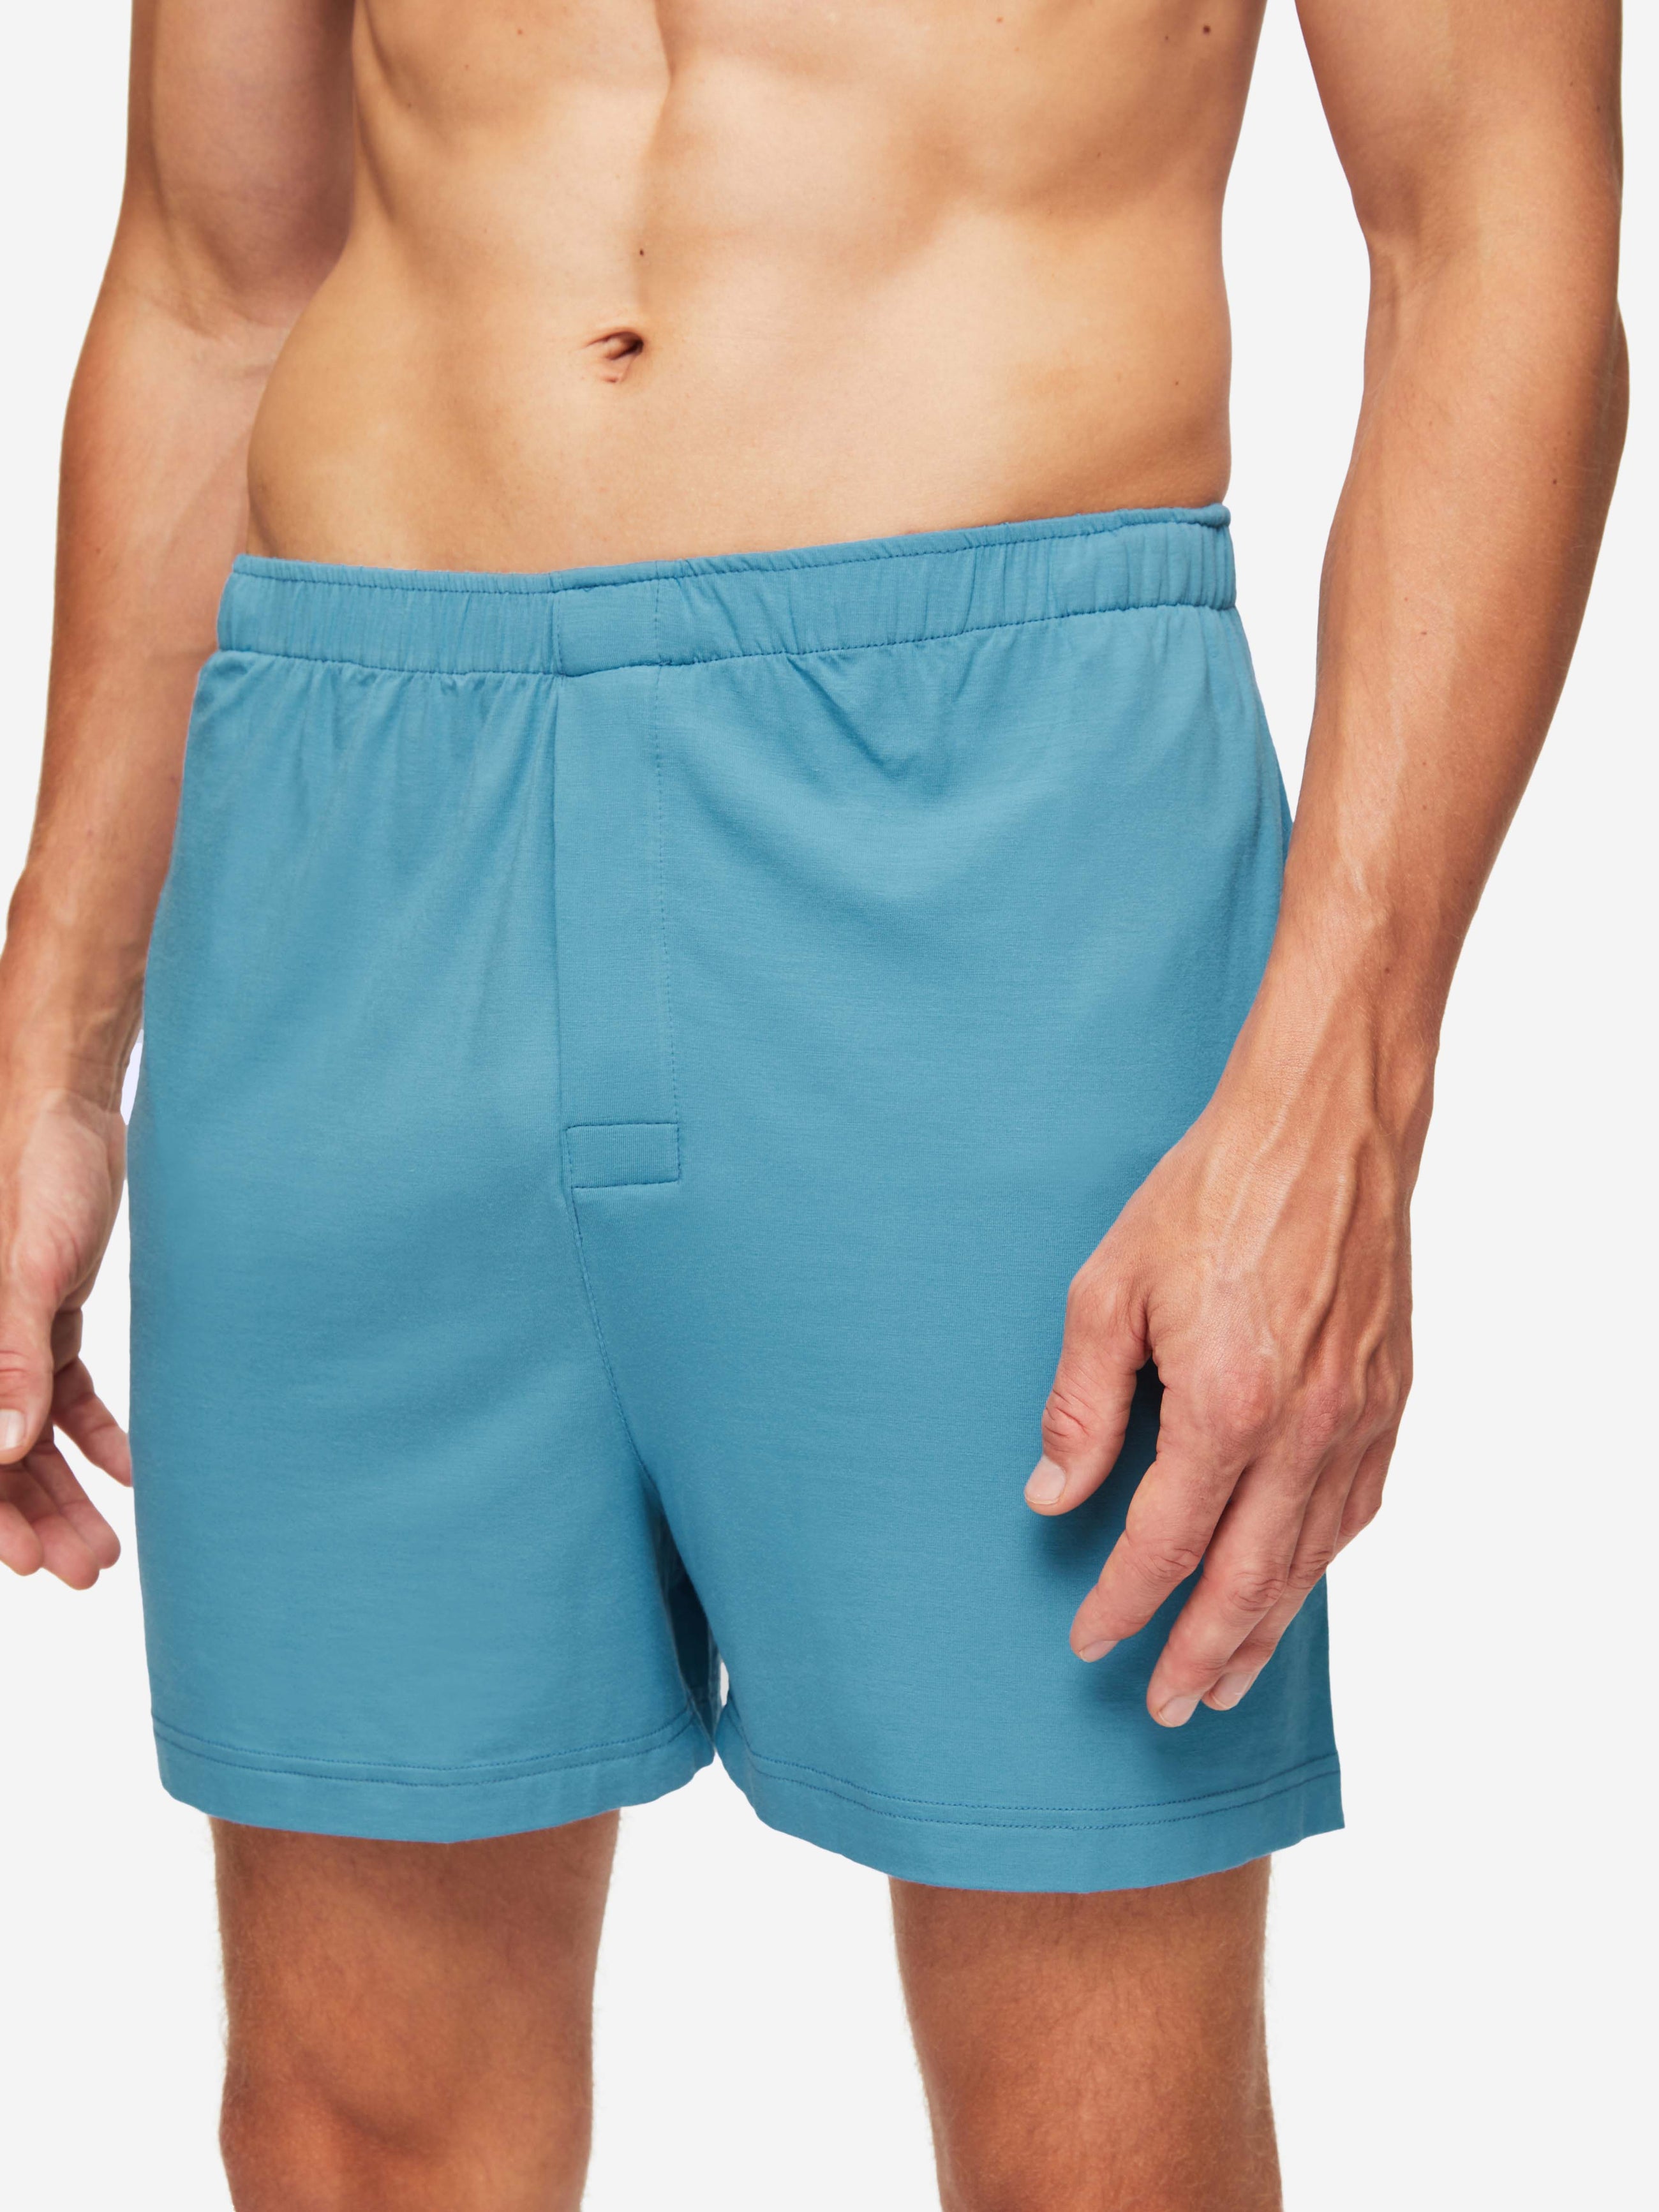 Men's Short Pyjamas Basel Micro Modal Stretch Harbour Blue